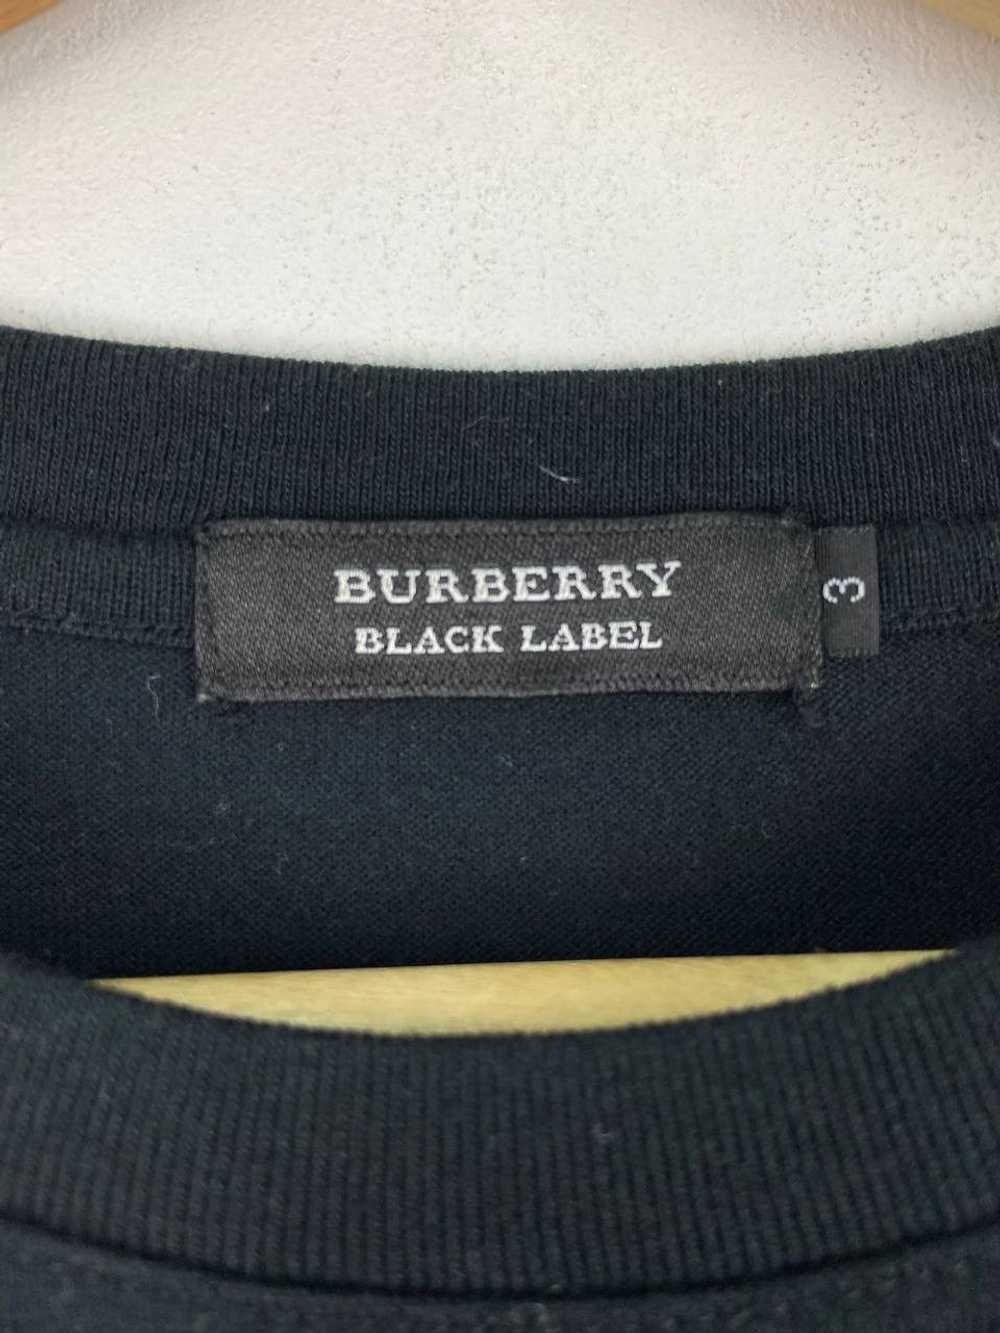 Burberry Burberry black label tshirt big logo - image 3